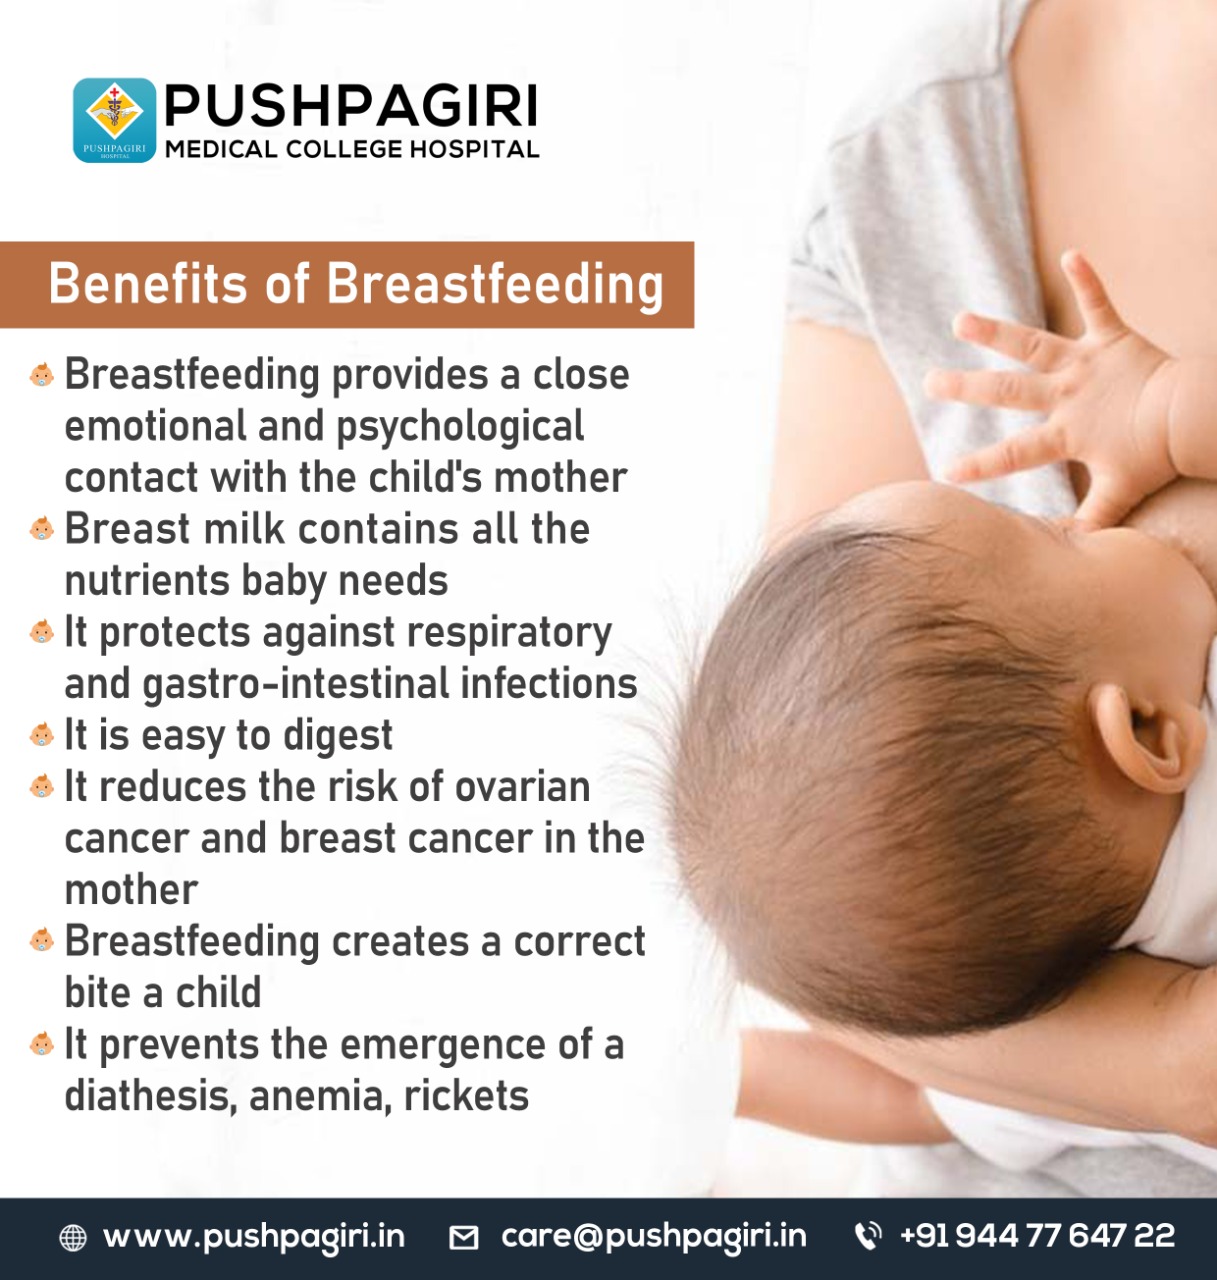 Breast Feeding Week - 1st to 7th Aug